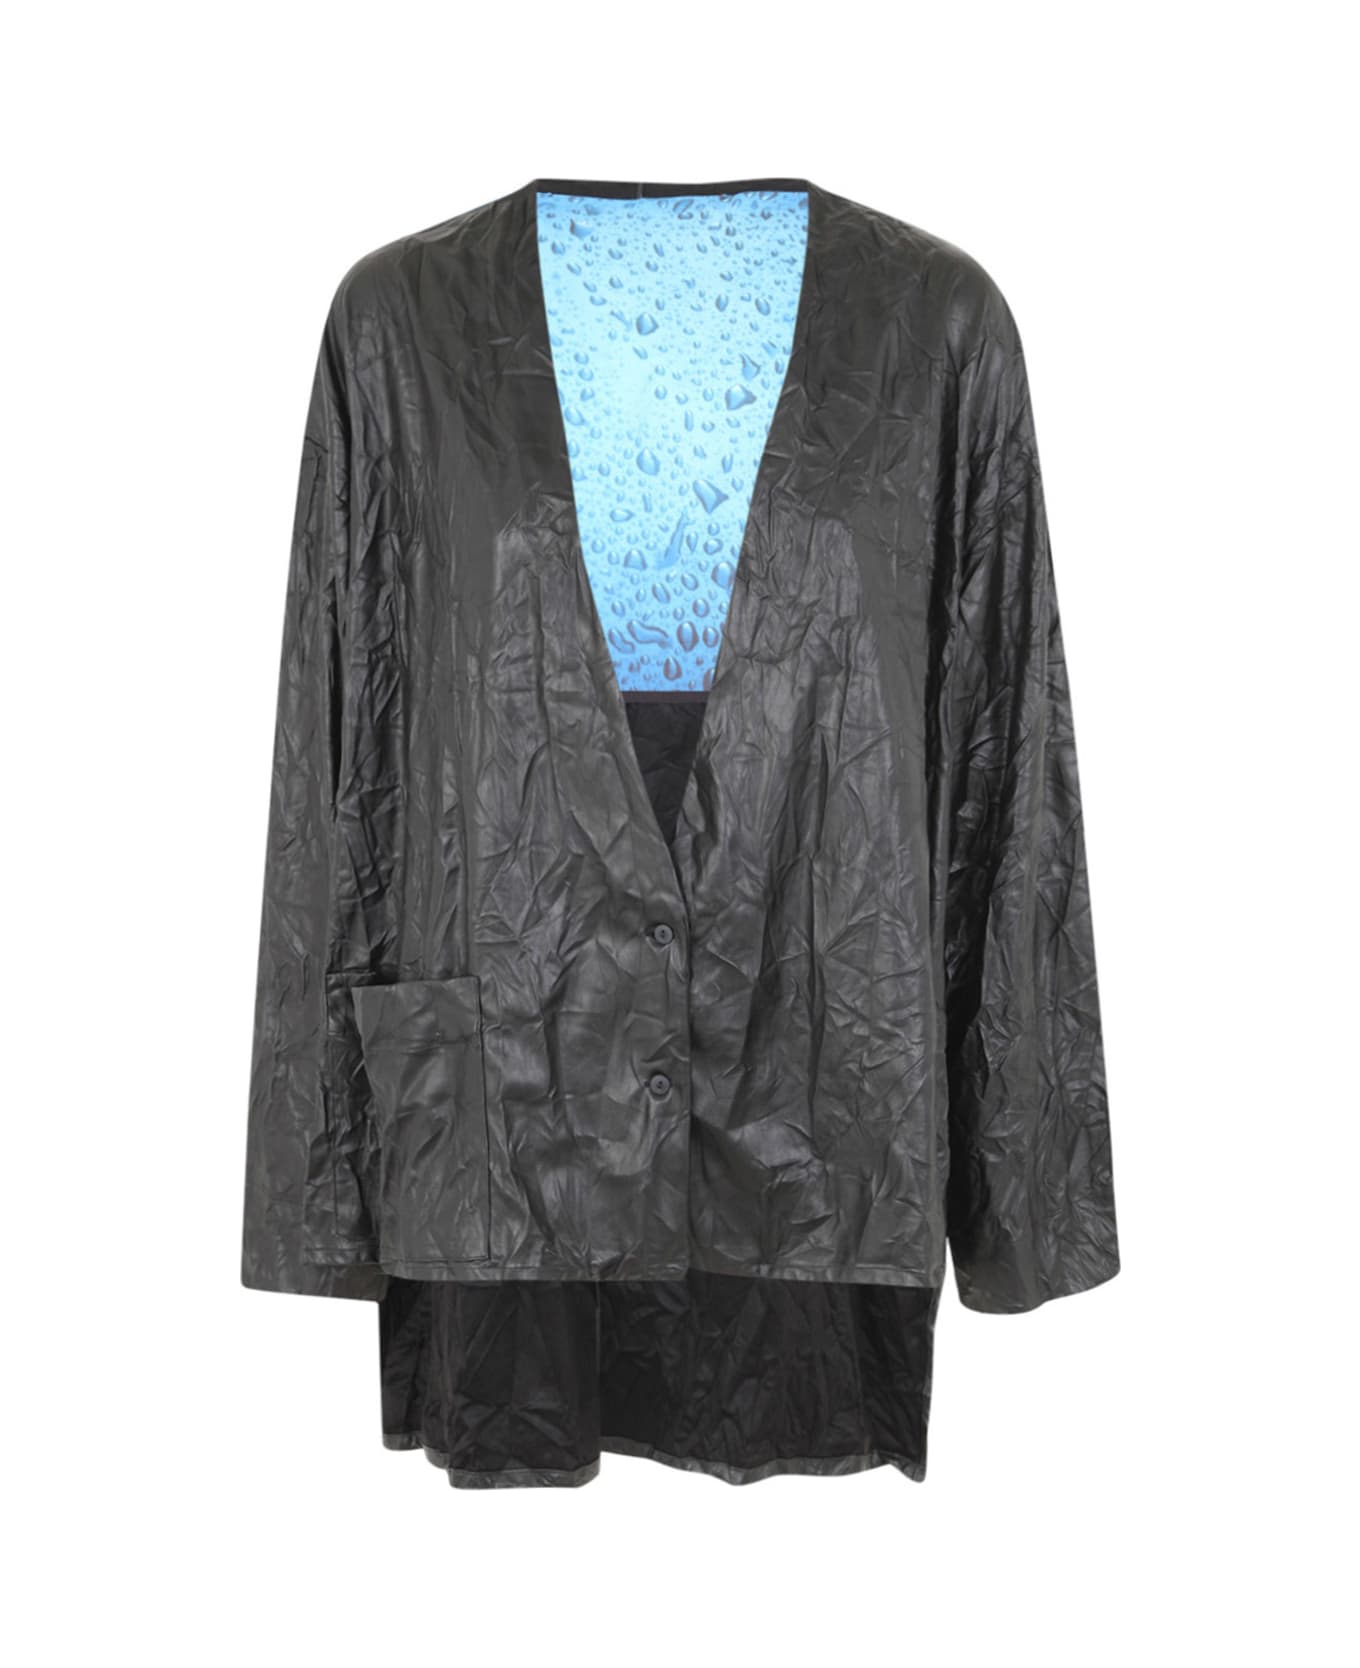 Maria Calderara Crinkled Faux Leather Sweater - Black